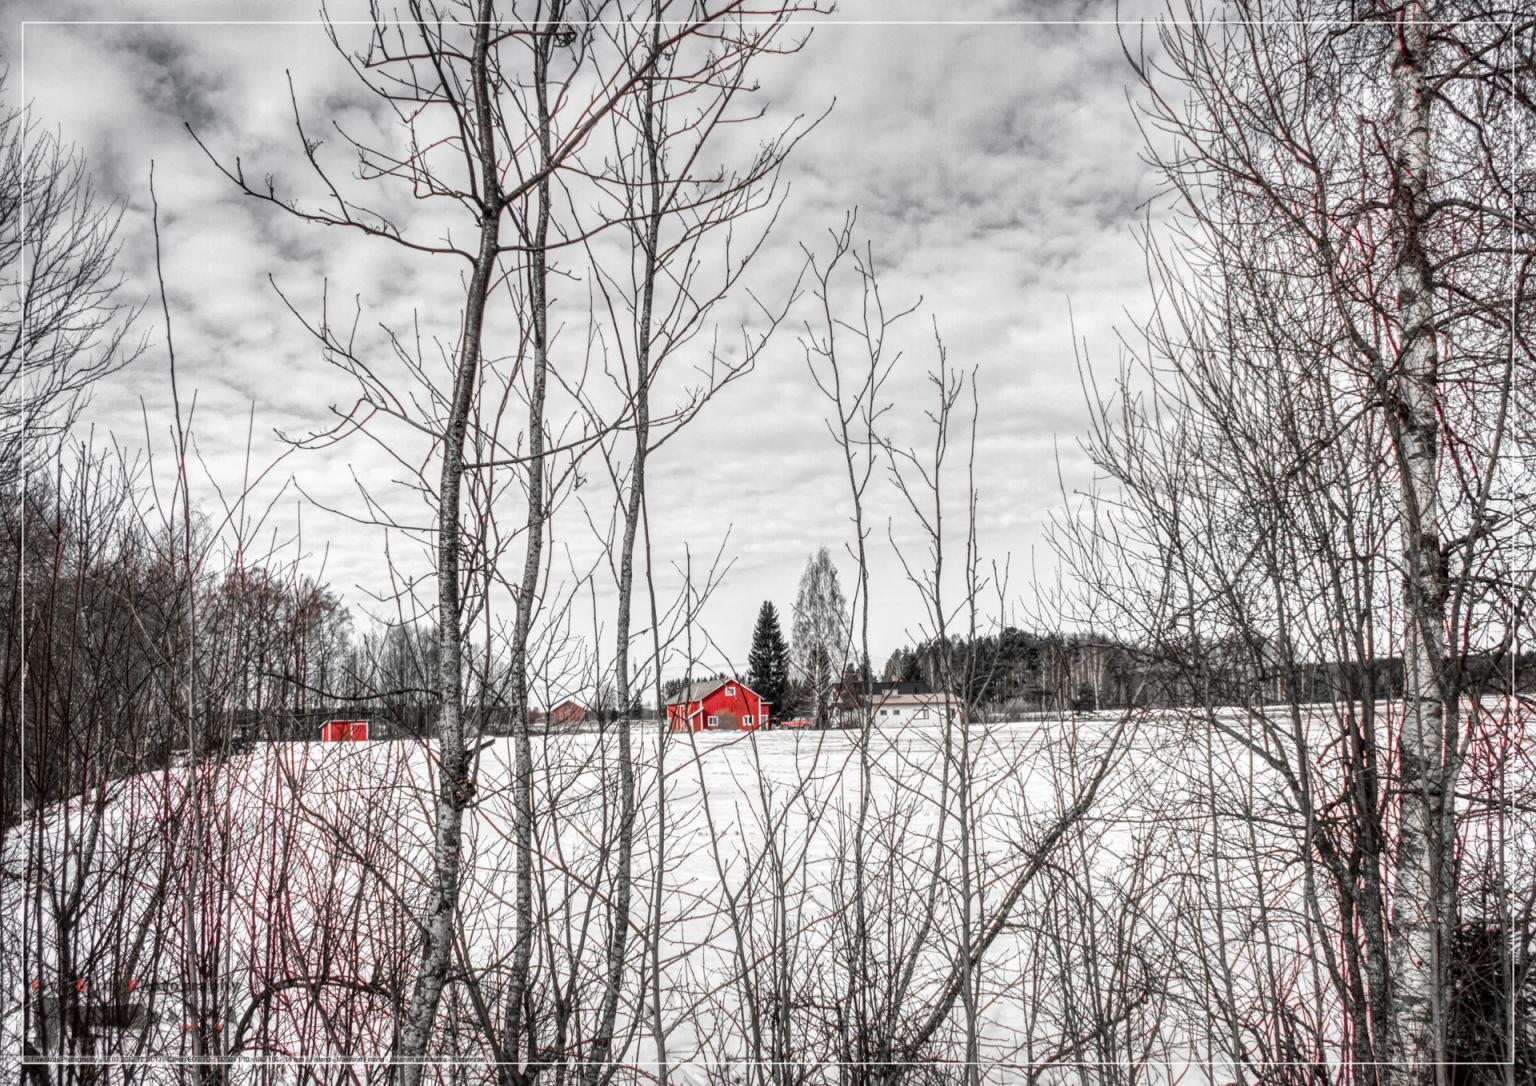 Winter landscape in the Eurajoki region near the Finnish nuclear power plants Olkiluoto 1 - 3